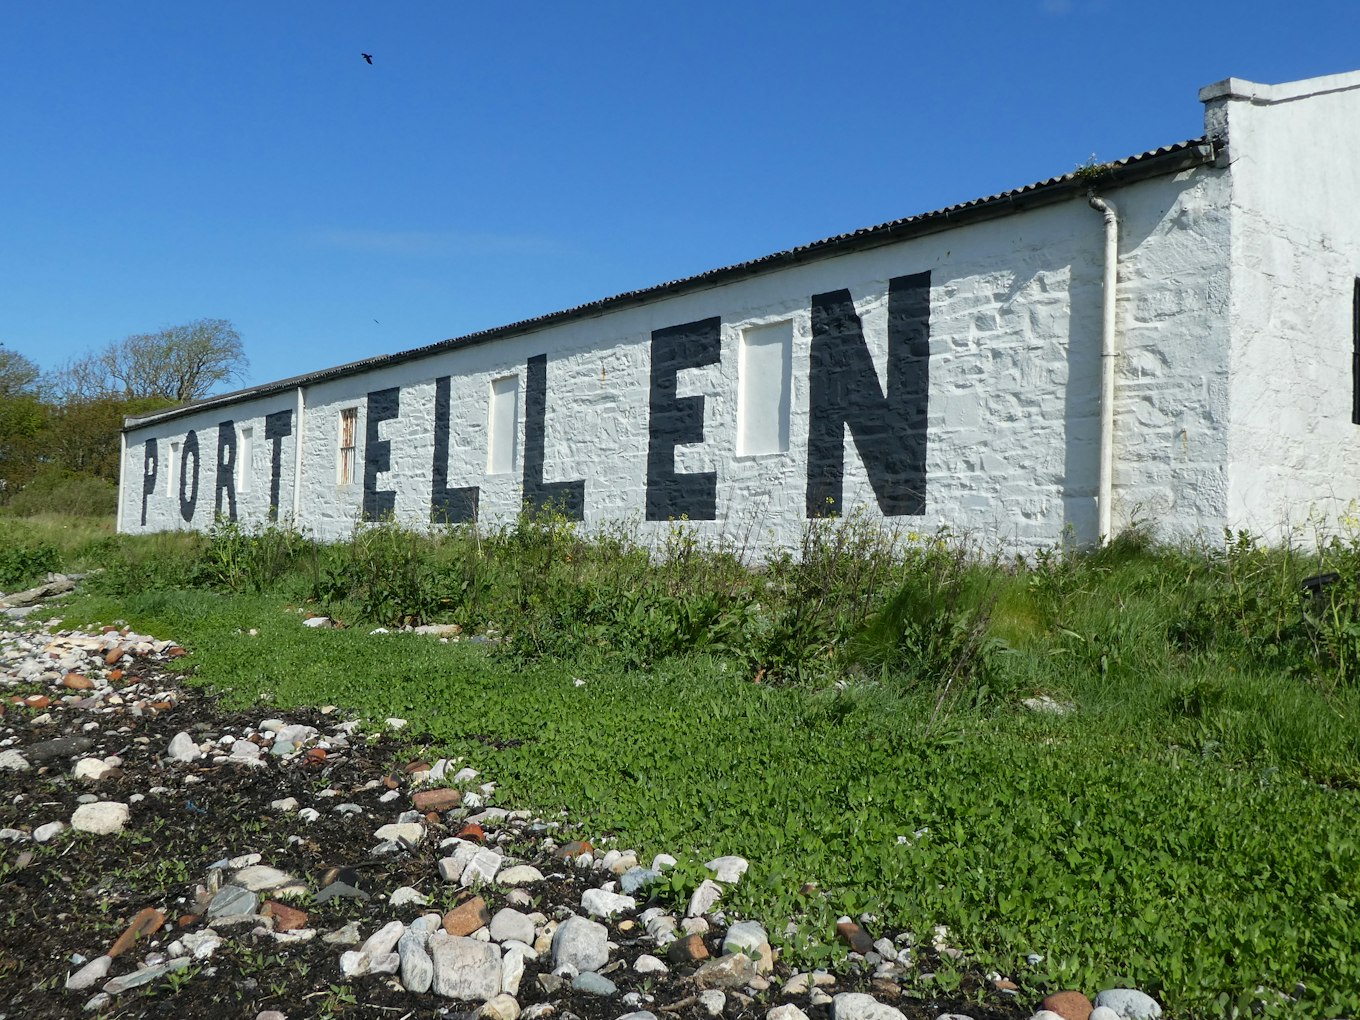 Port Ellen distilleerderij | Isle of Islay (Travel4Reasons)